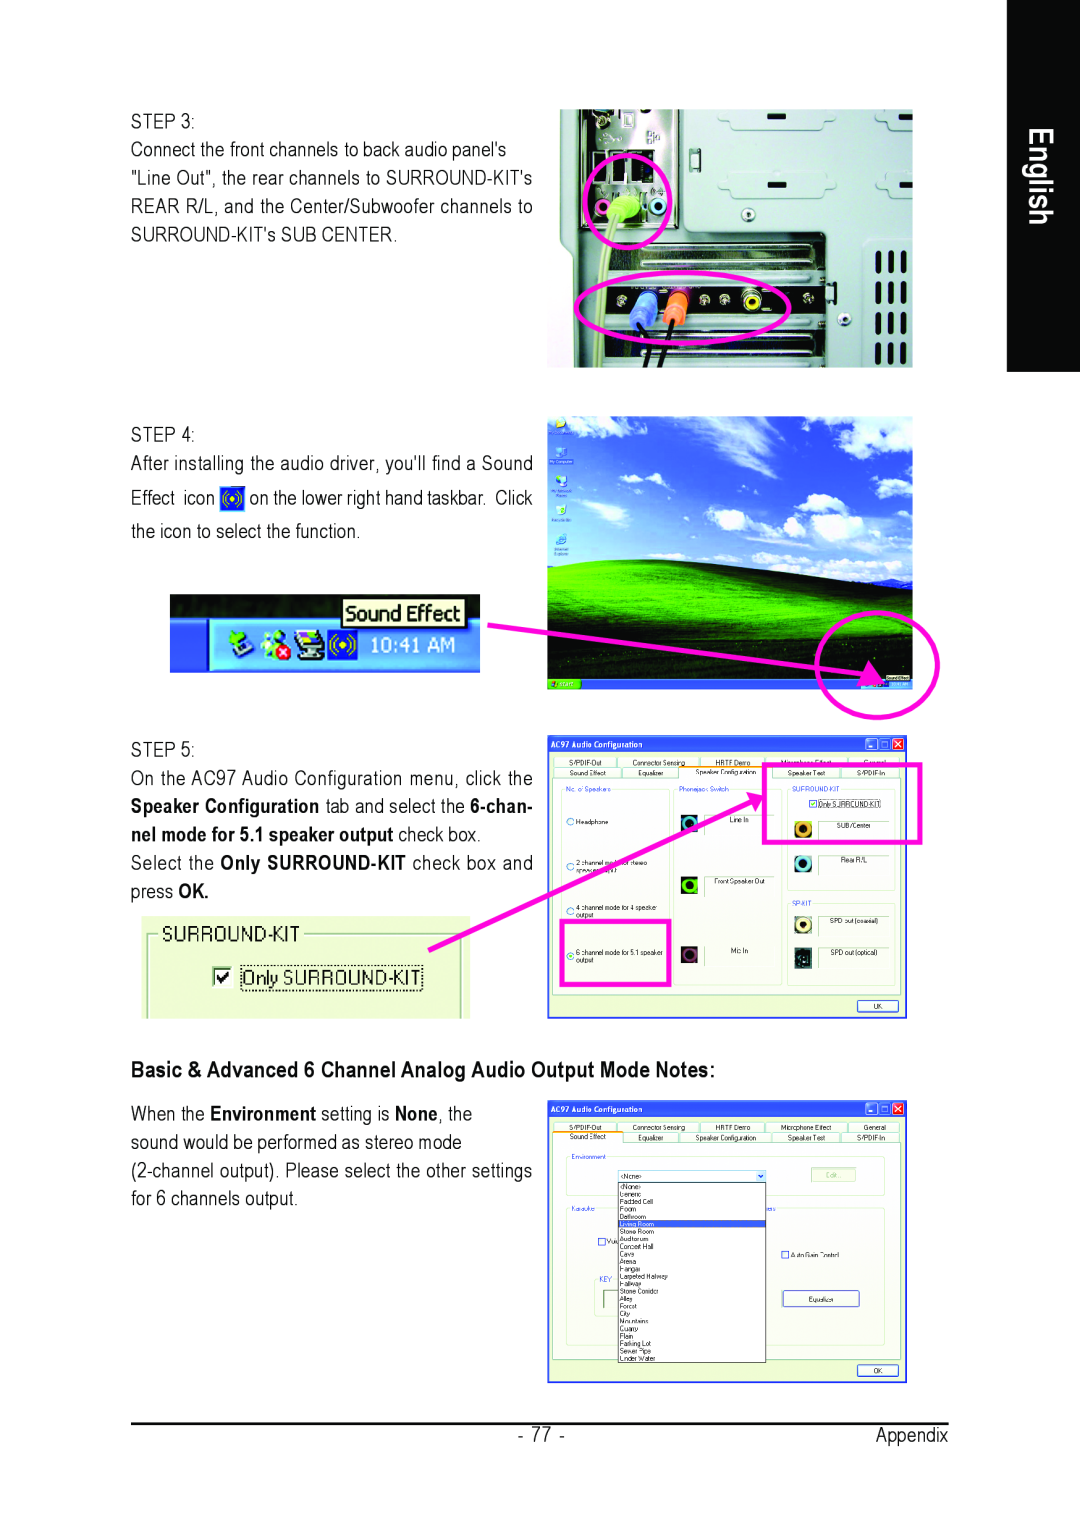 Gigabyte GA-8VM800M-775 user manual Basic & Advanced 6 Channel Analog Audio Output Mode Notes, English, Appendix 